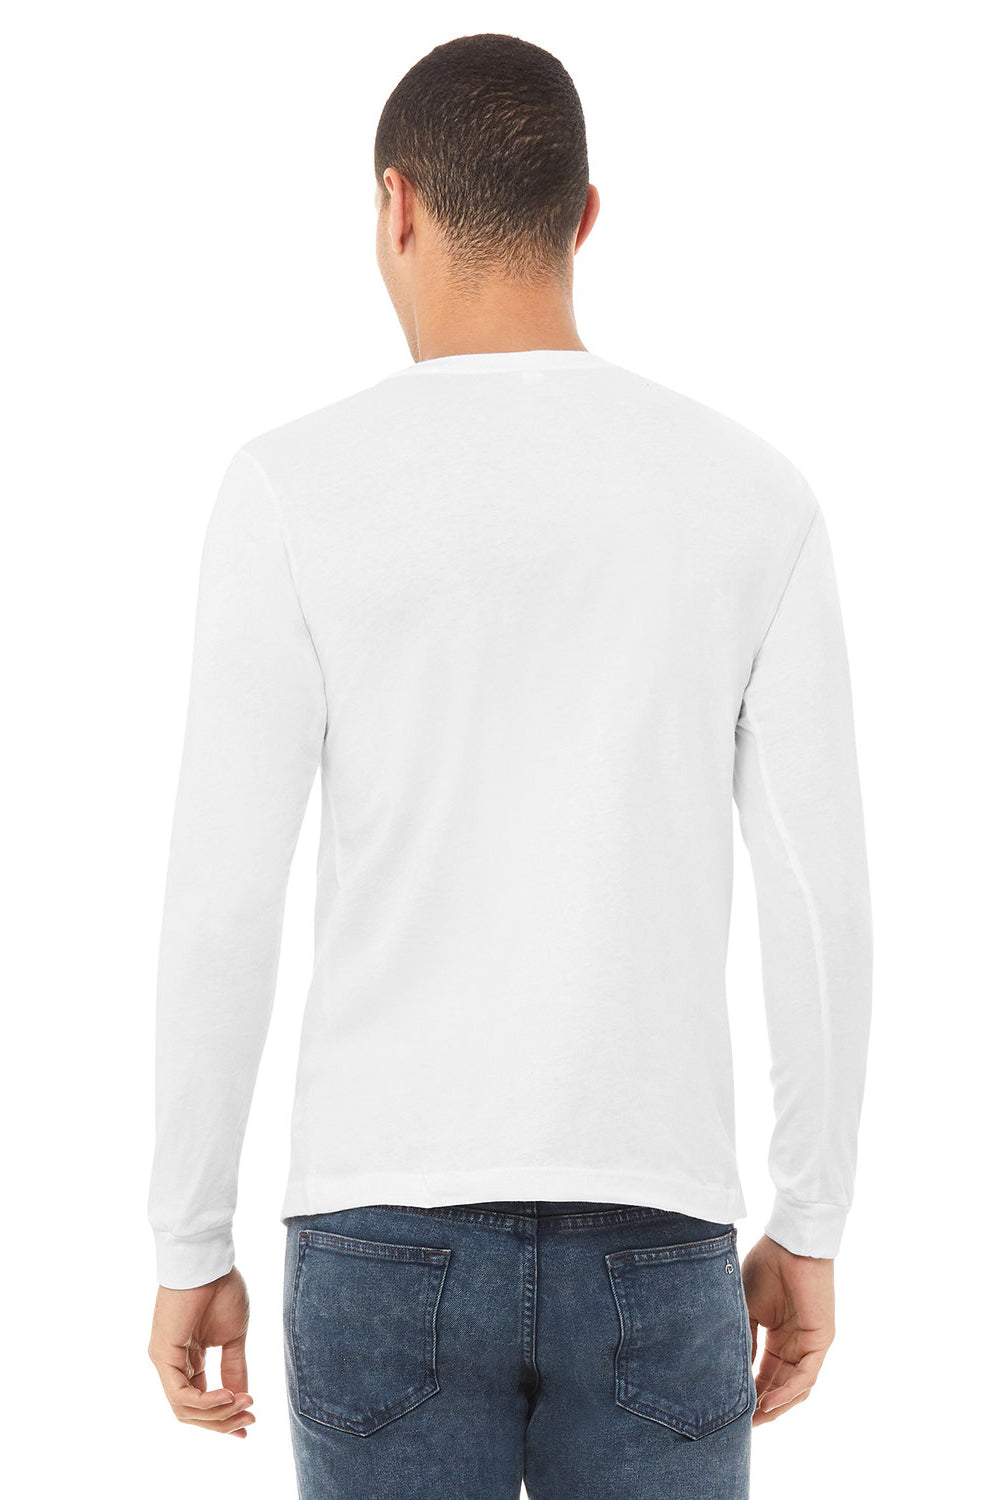 Bella + Canvas BC3513 Mens Long Sleeve Crewneck T-Shirt Solid White Model Back